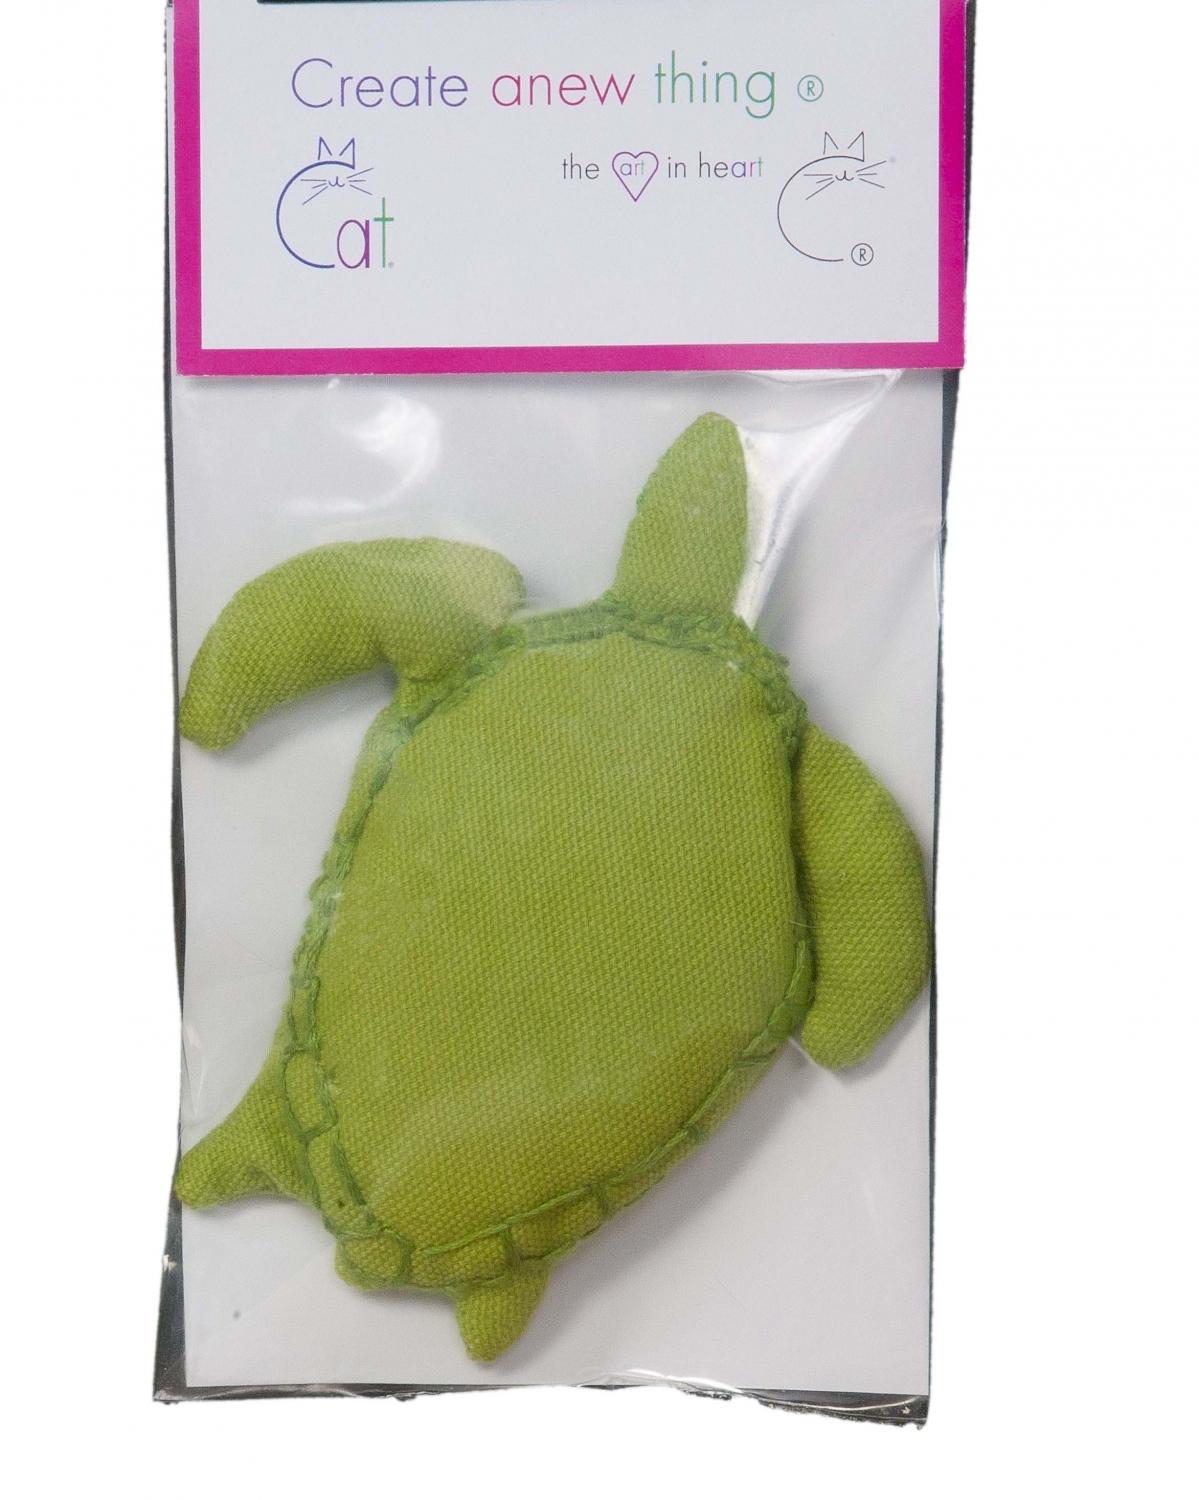 Honu (sea turtle) toy